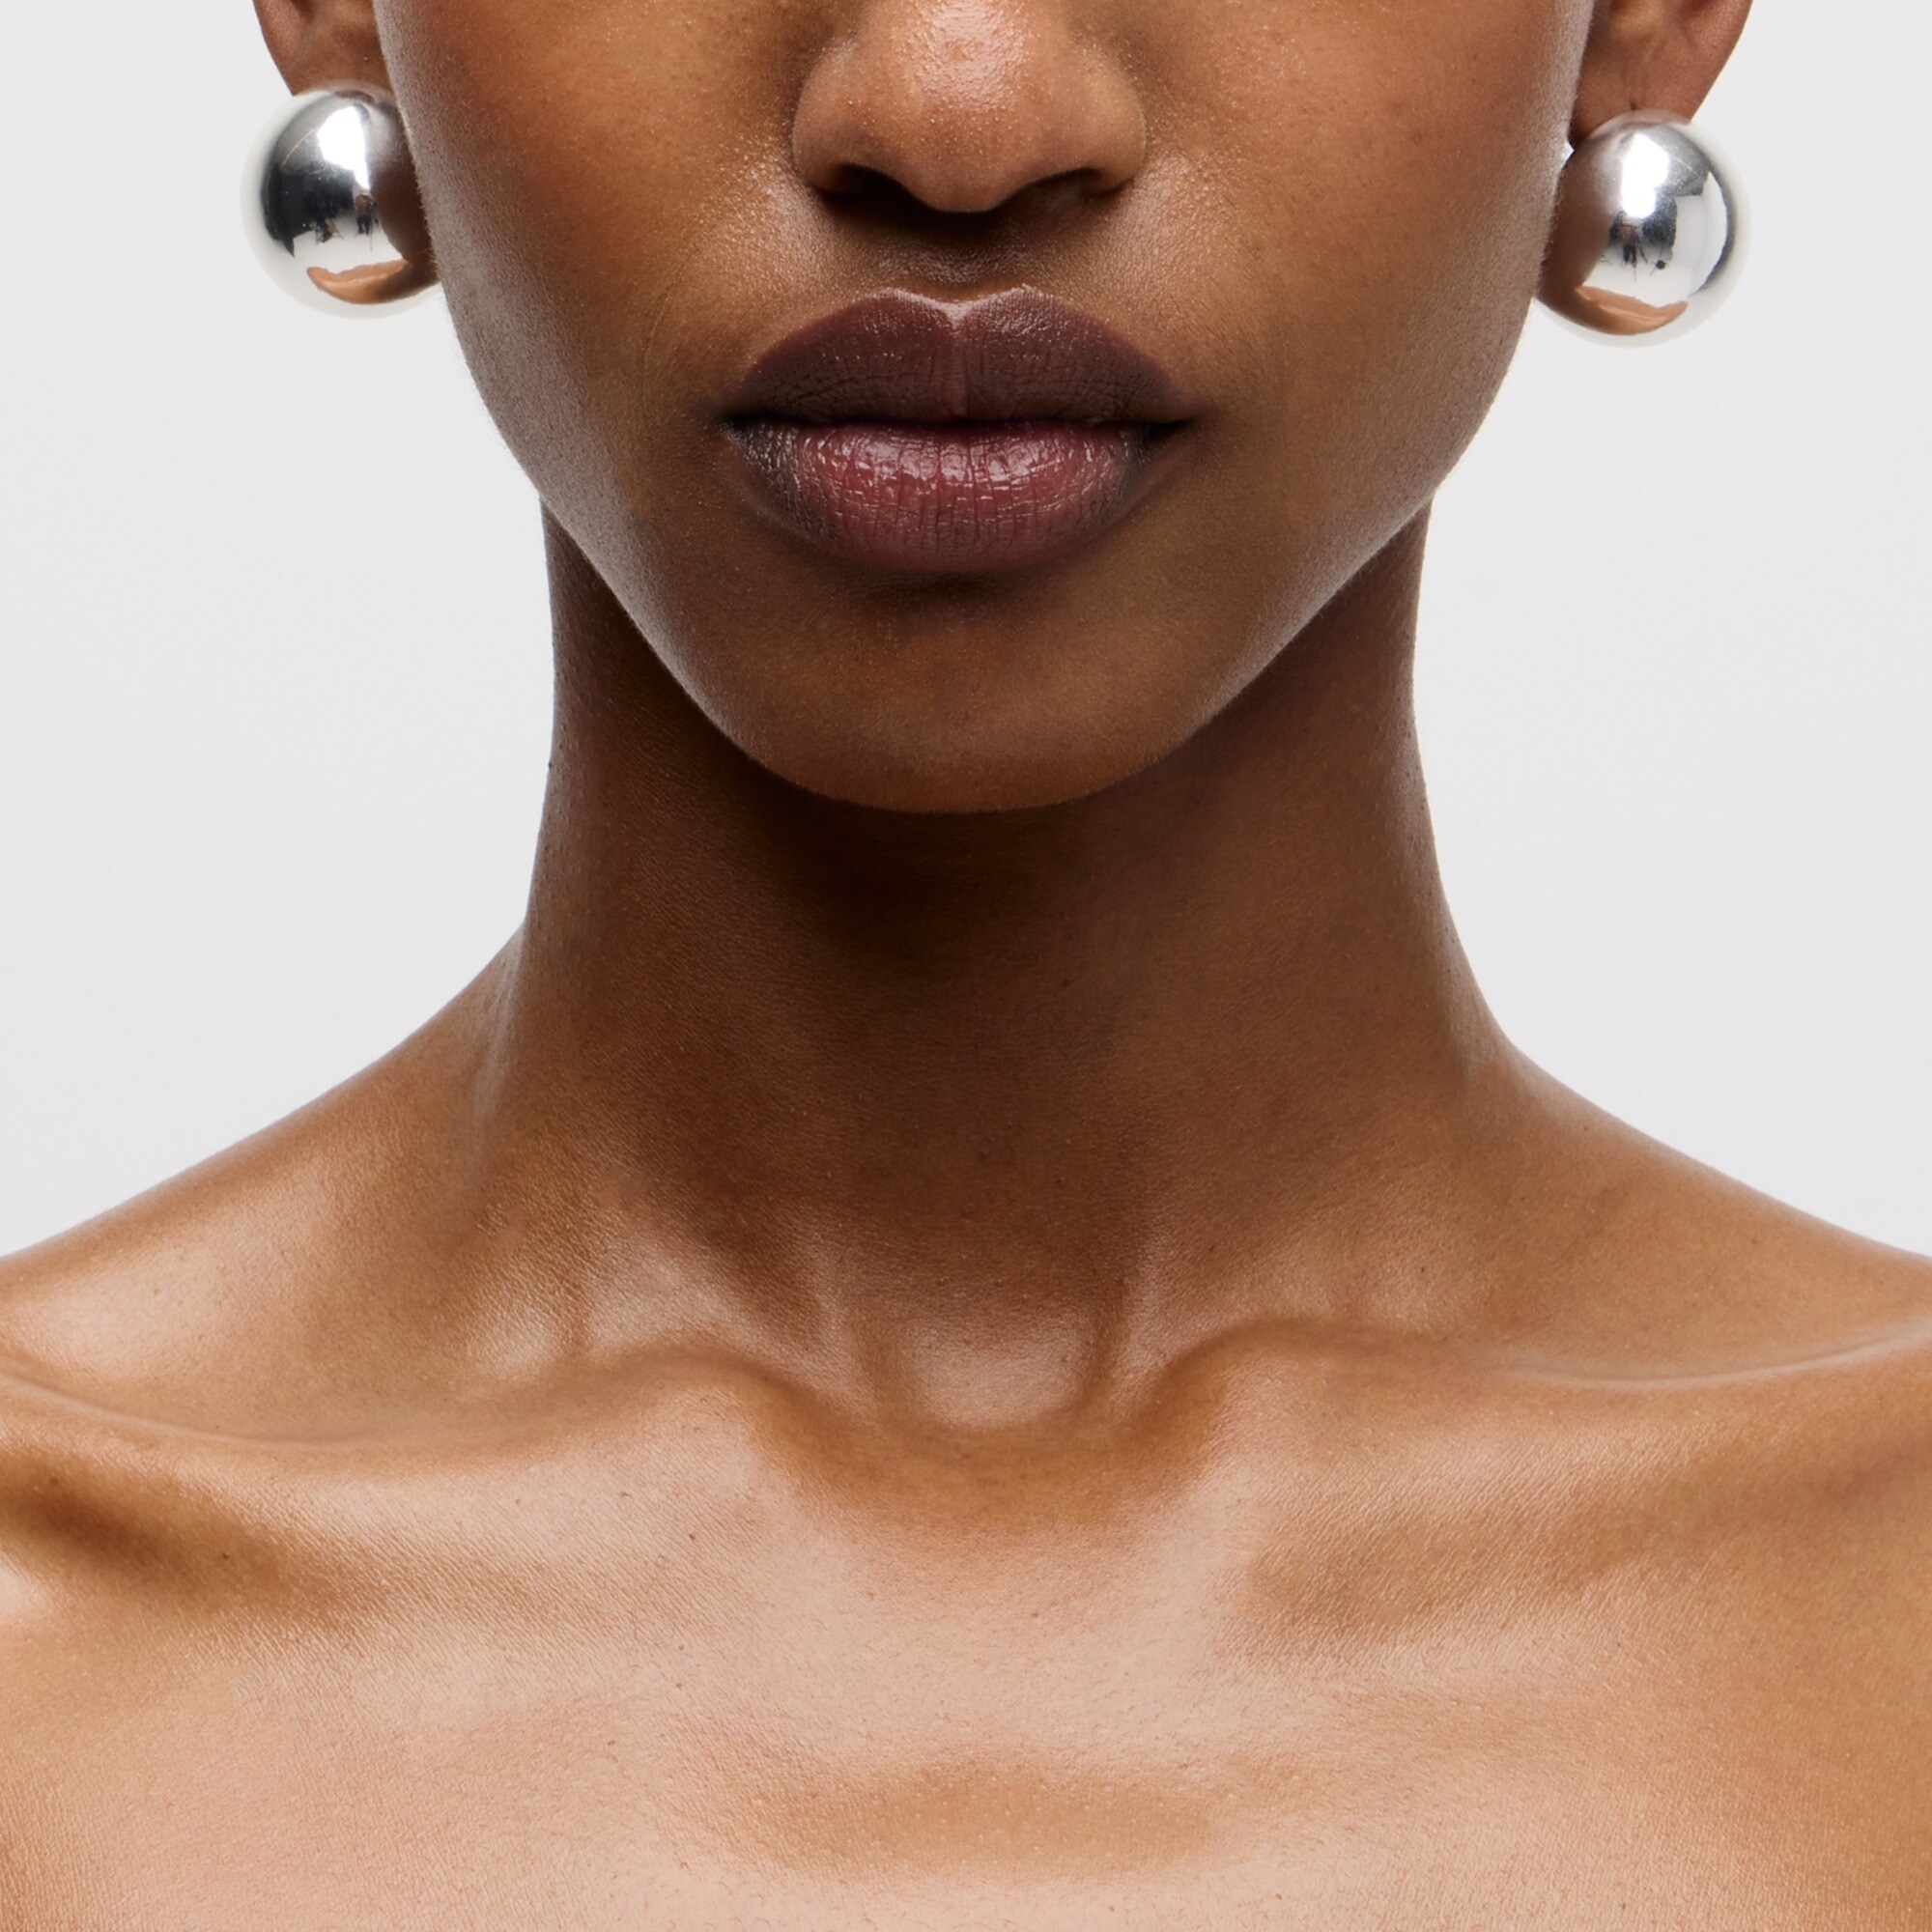 womens Oversized metallic-ball stud earrings